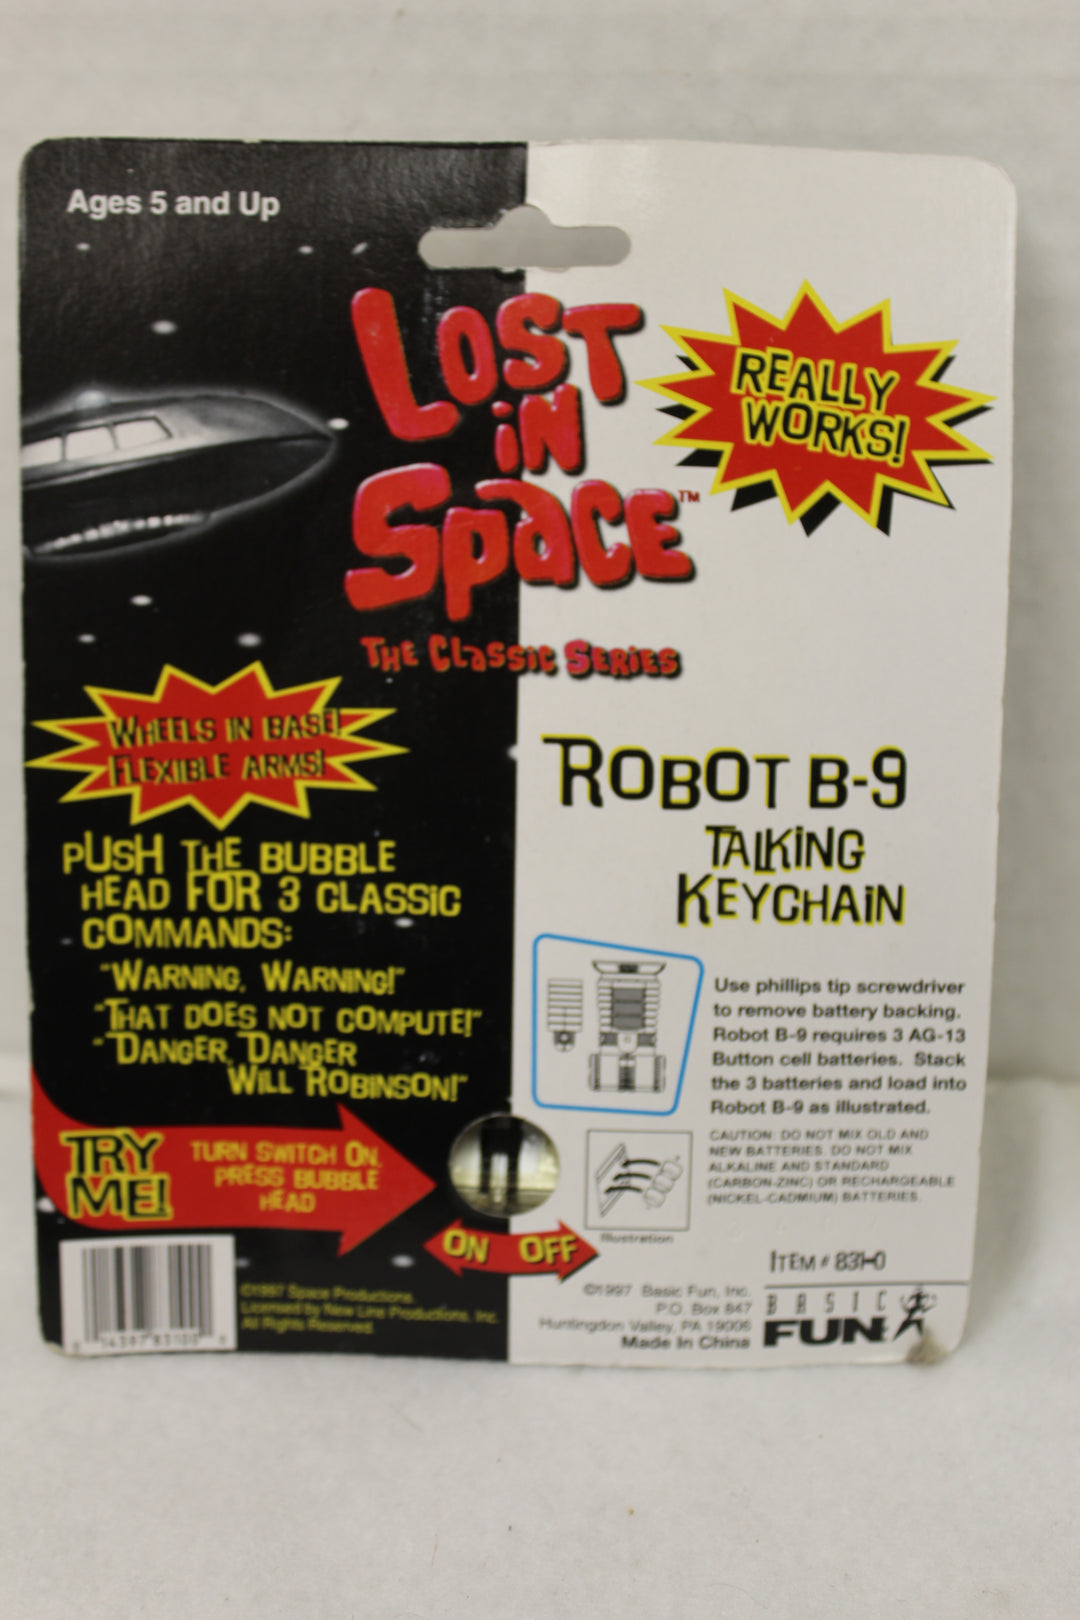 1997 Basic Fun Inc. Lost In Space Robot B-9 Talking Keychain